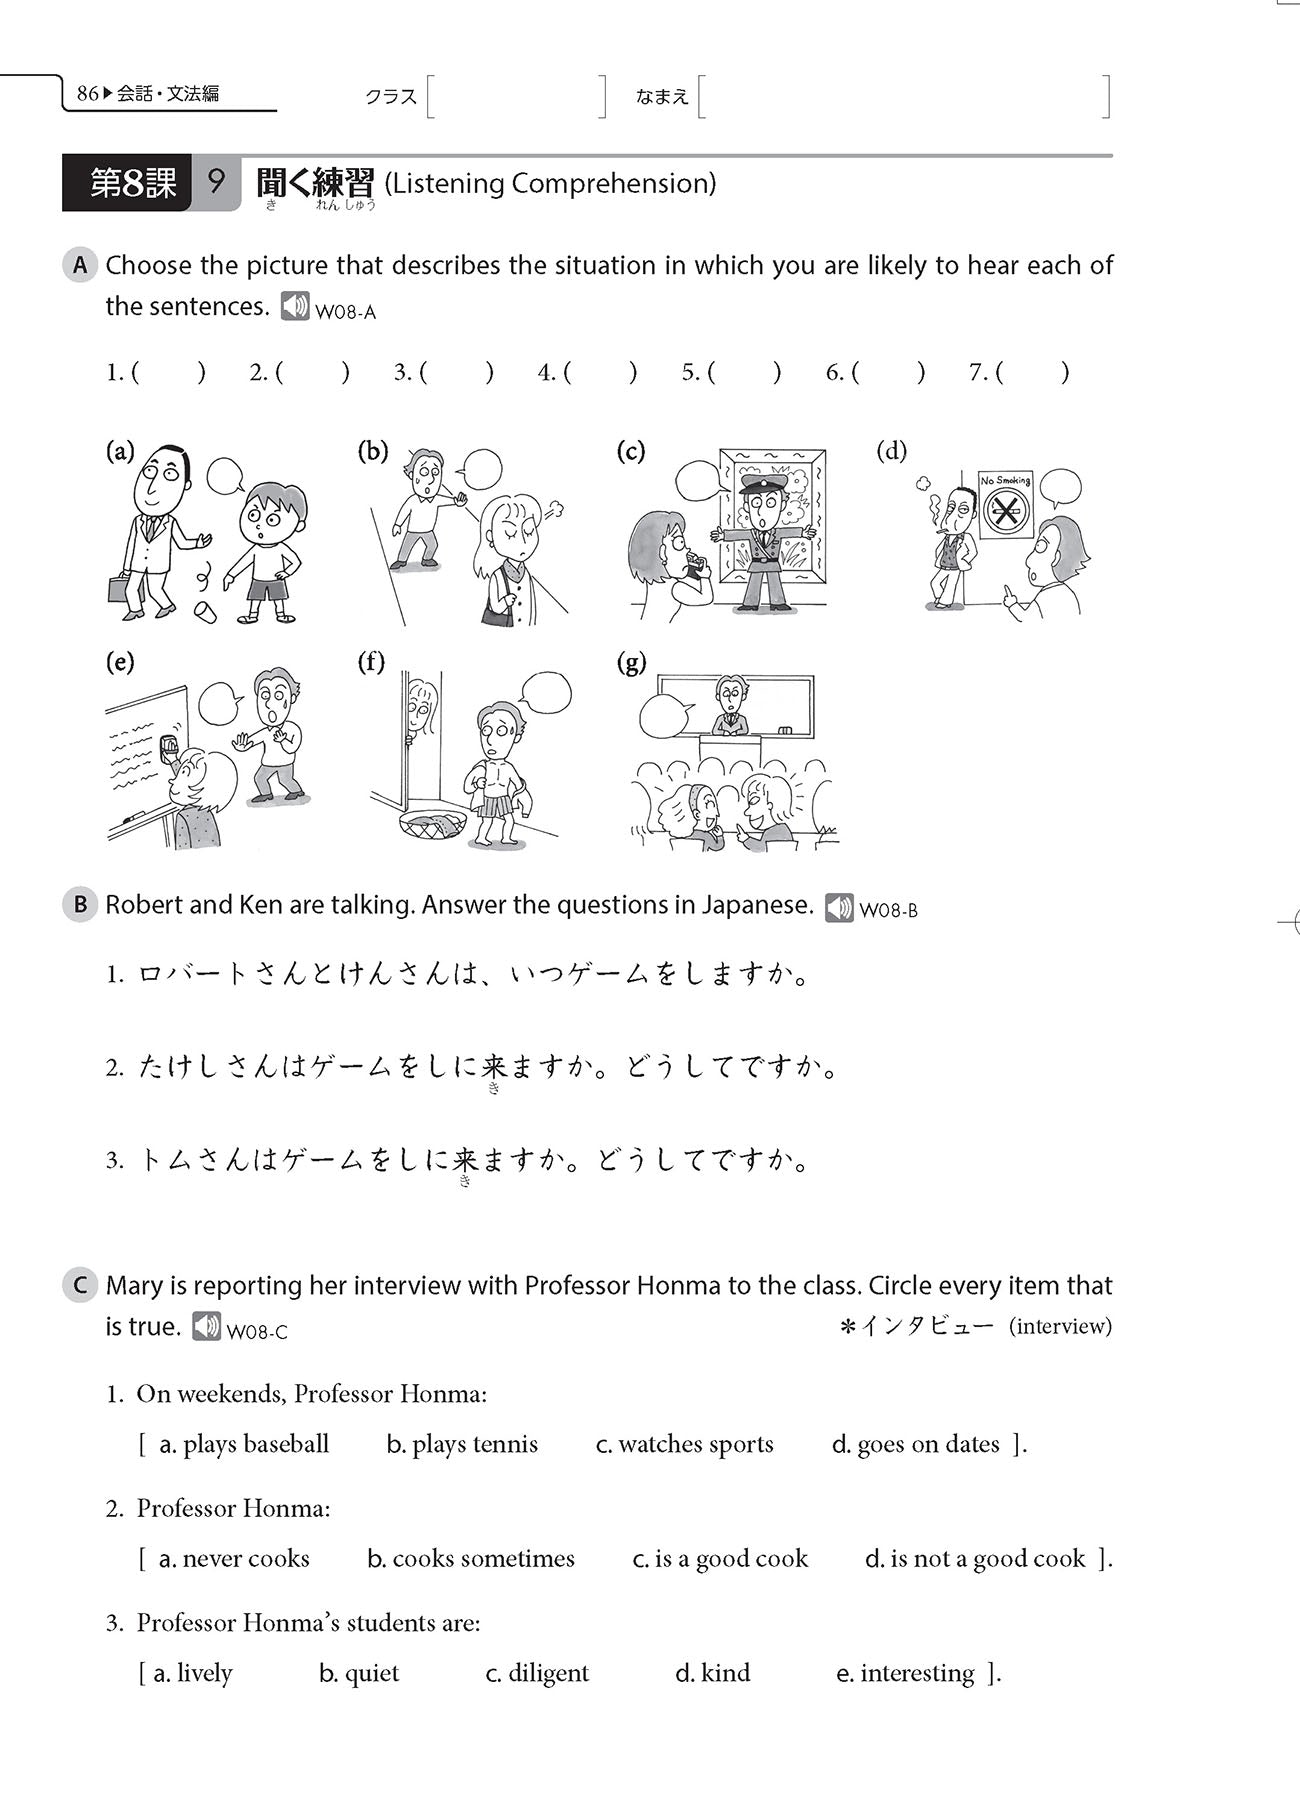 Genki Workbook 2 - Sample Page 5